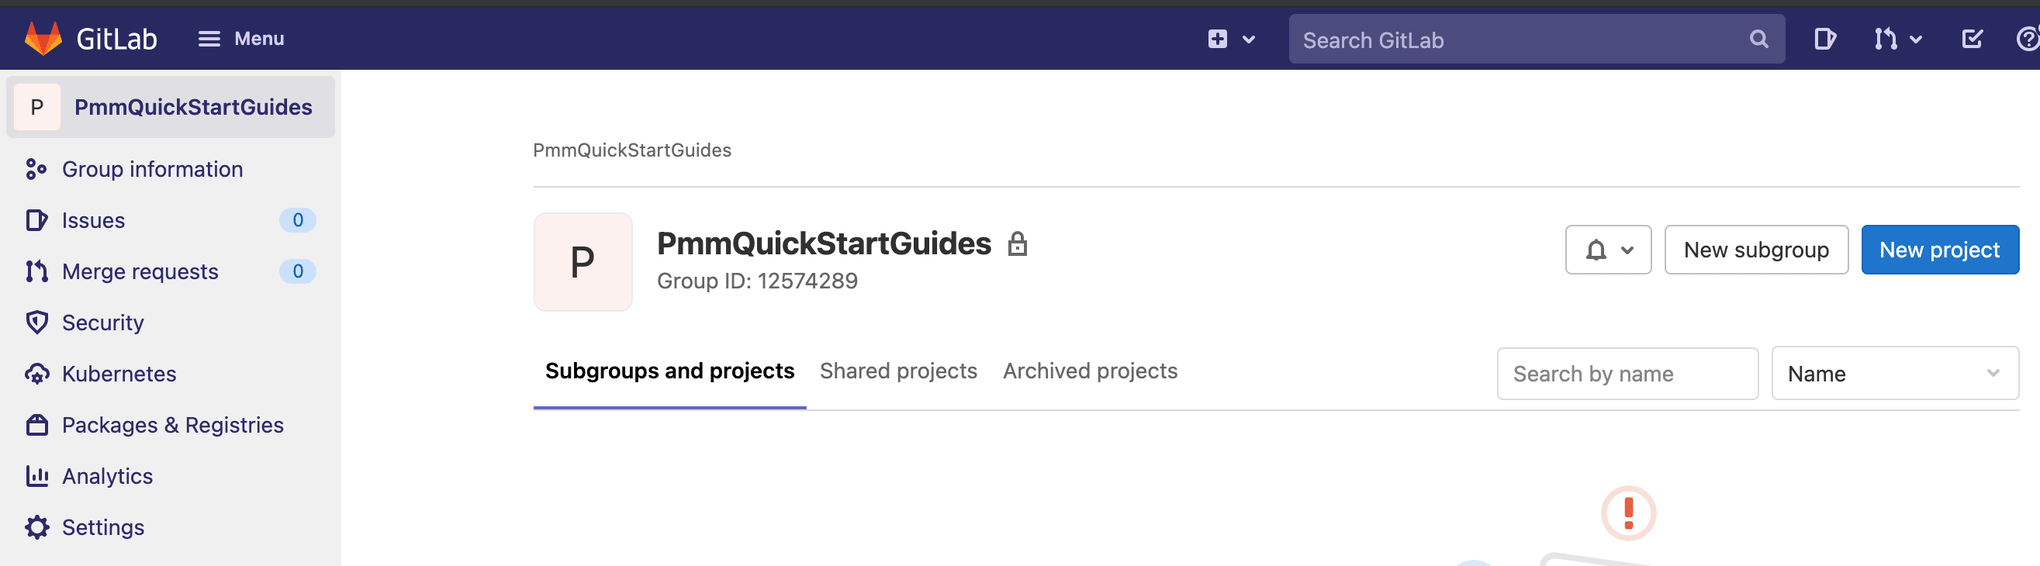 GitLab에서 "새 프로젝트"를 만들기 위해 탐색